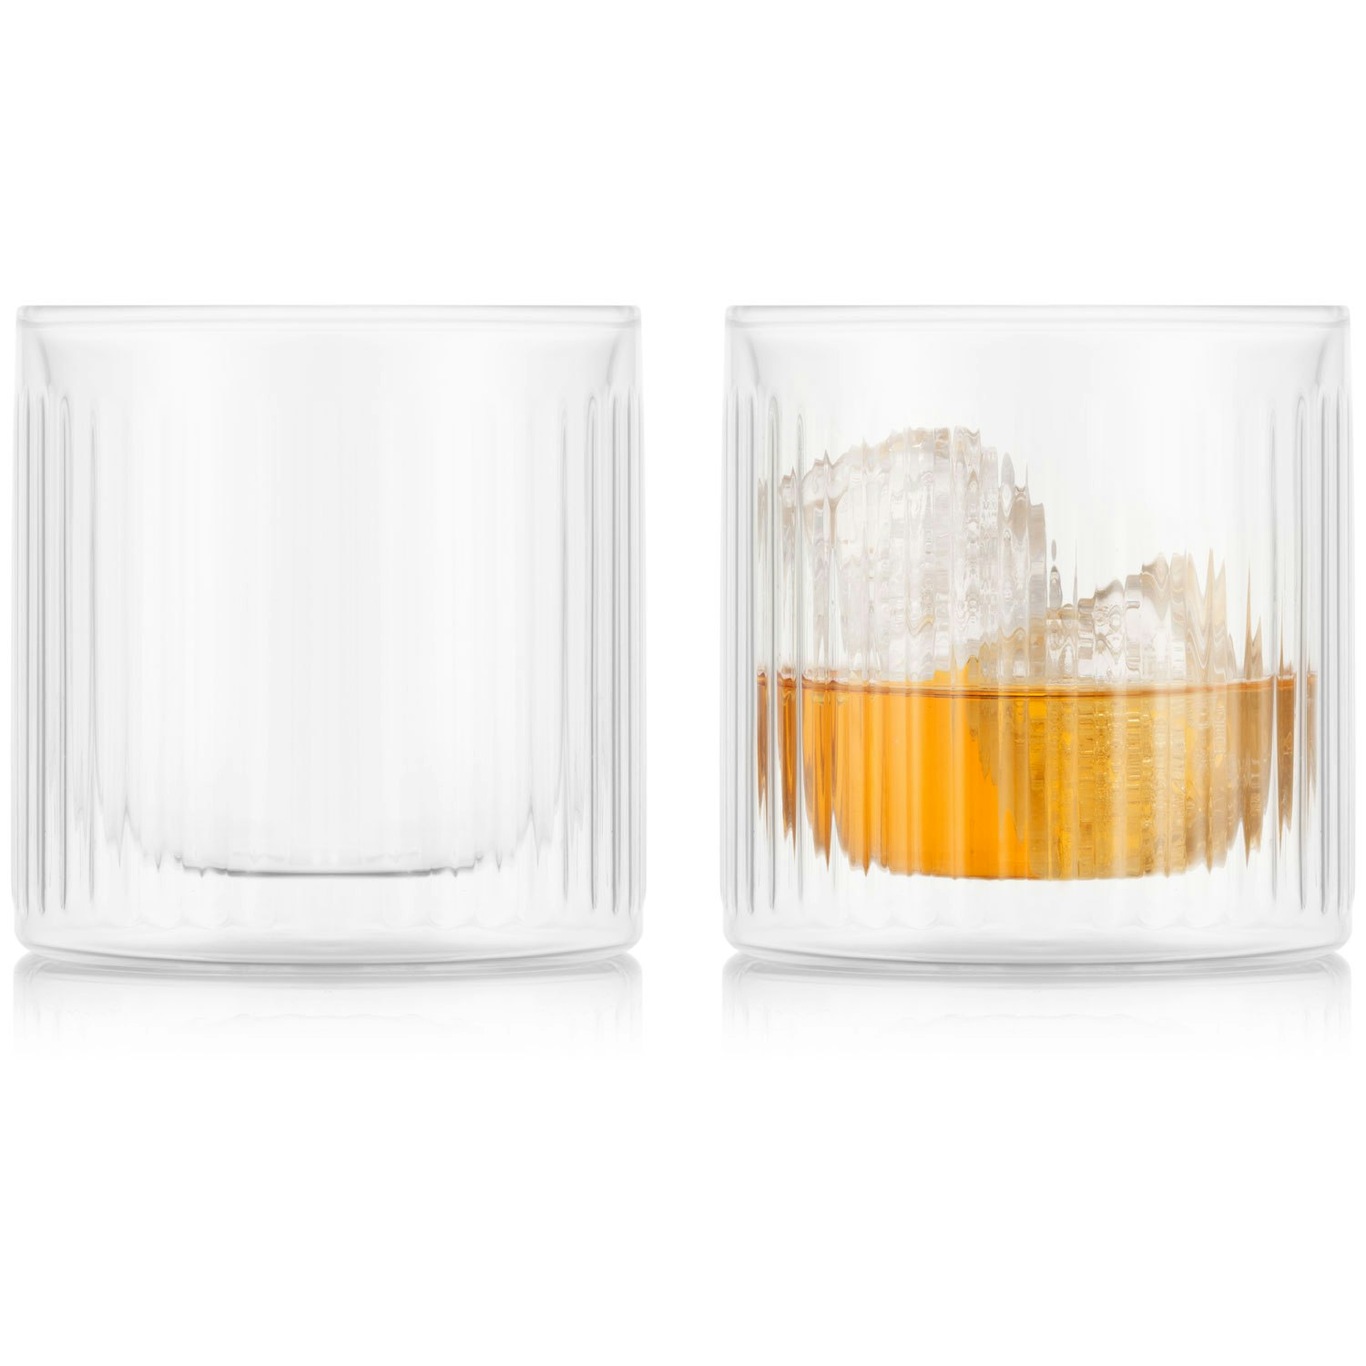 Bodum Skål Double Wall Whisky Glass, Set of 2 - Worldshop